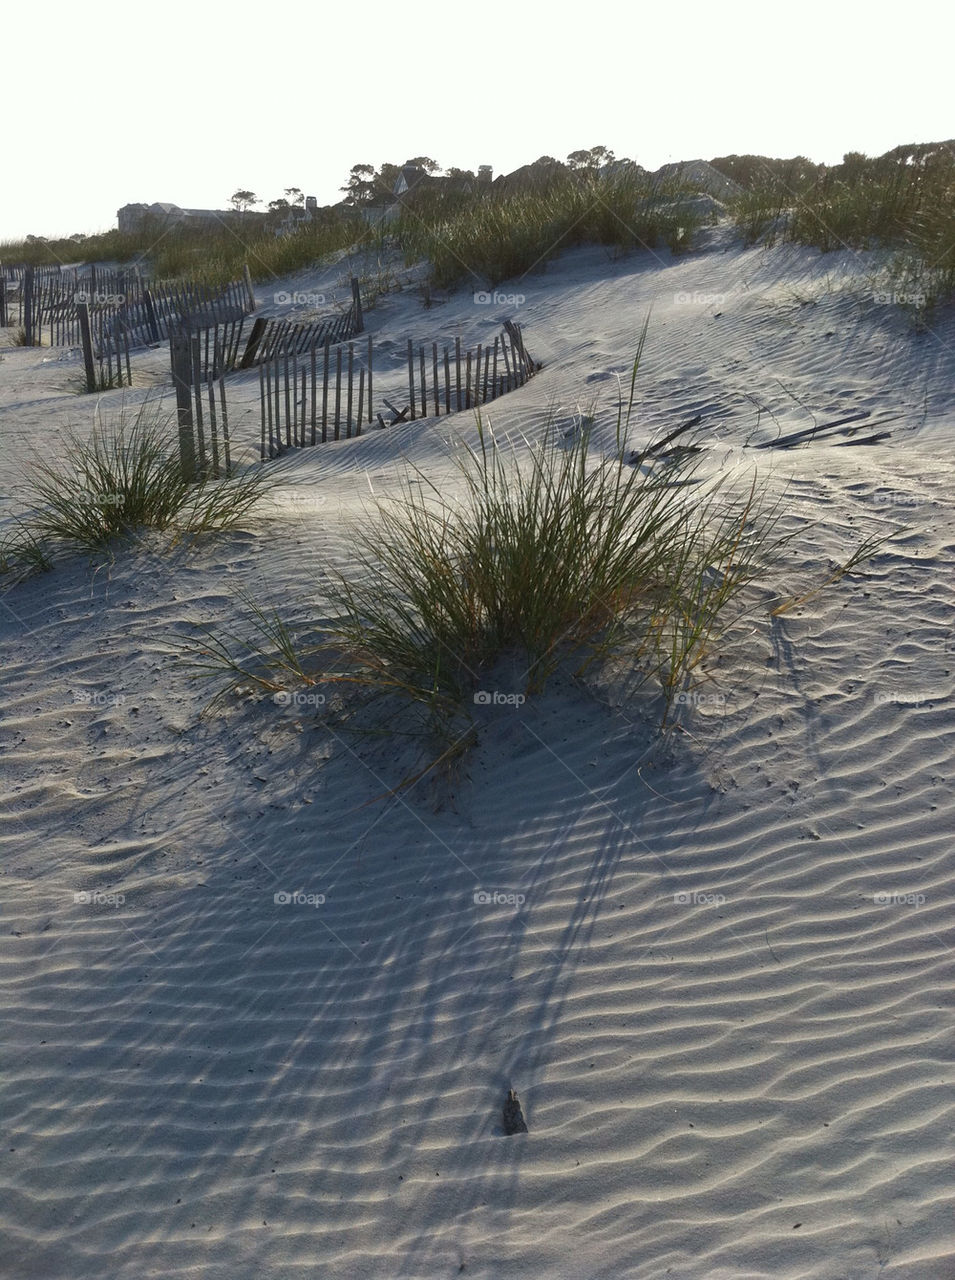 beach grass fence sand by tplips01